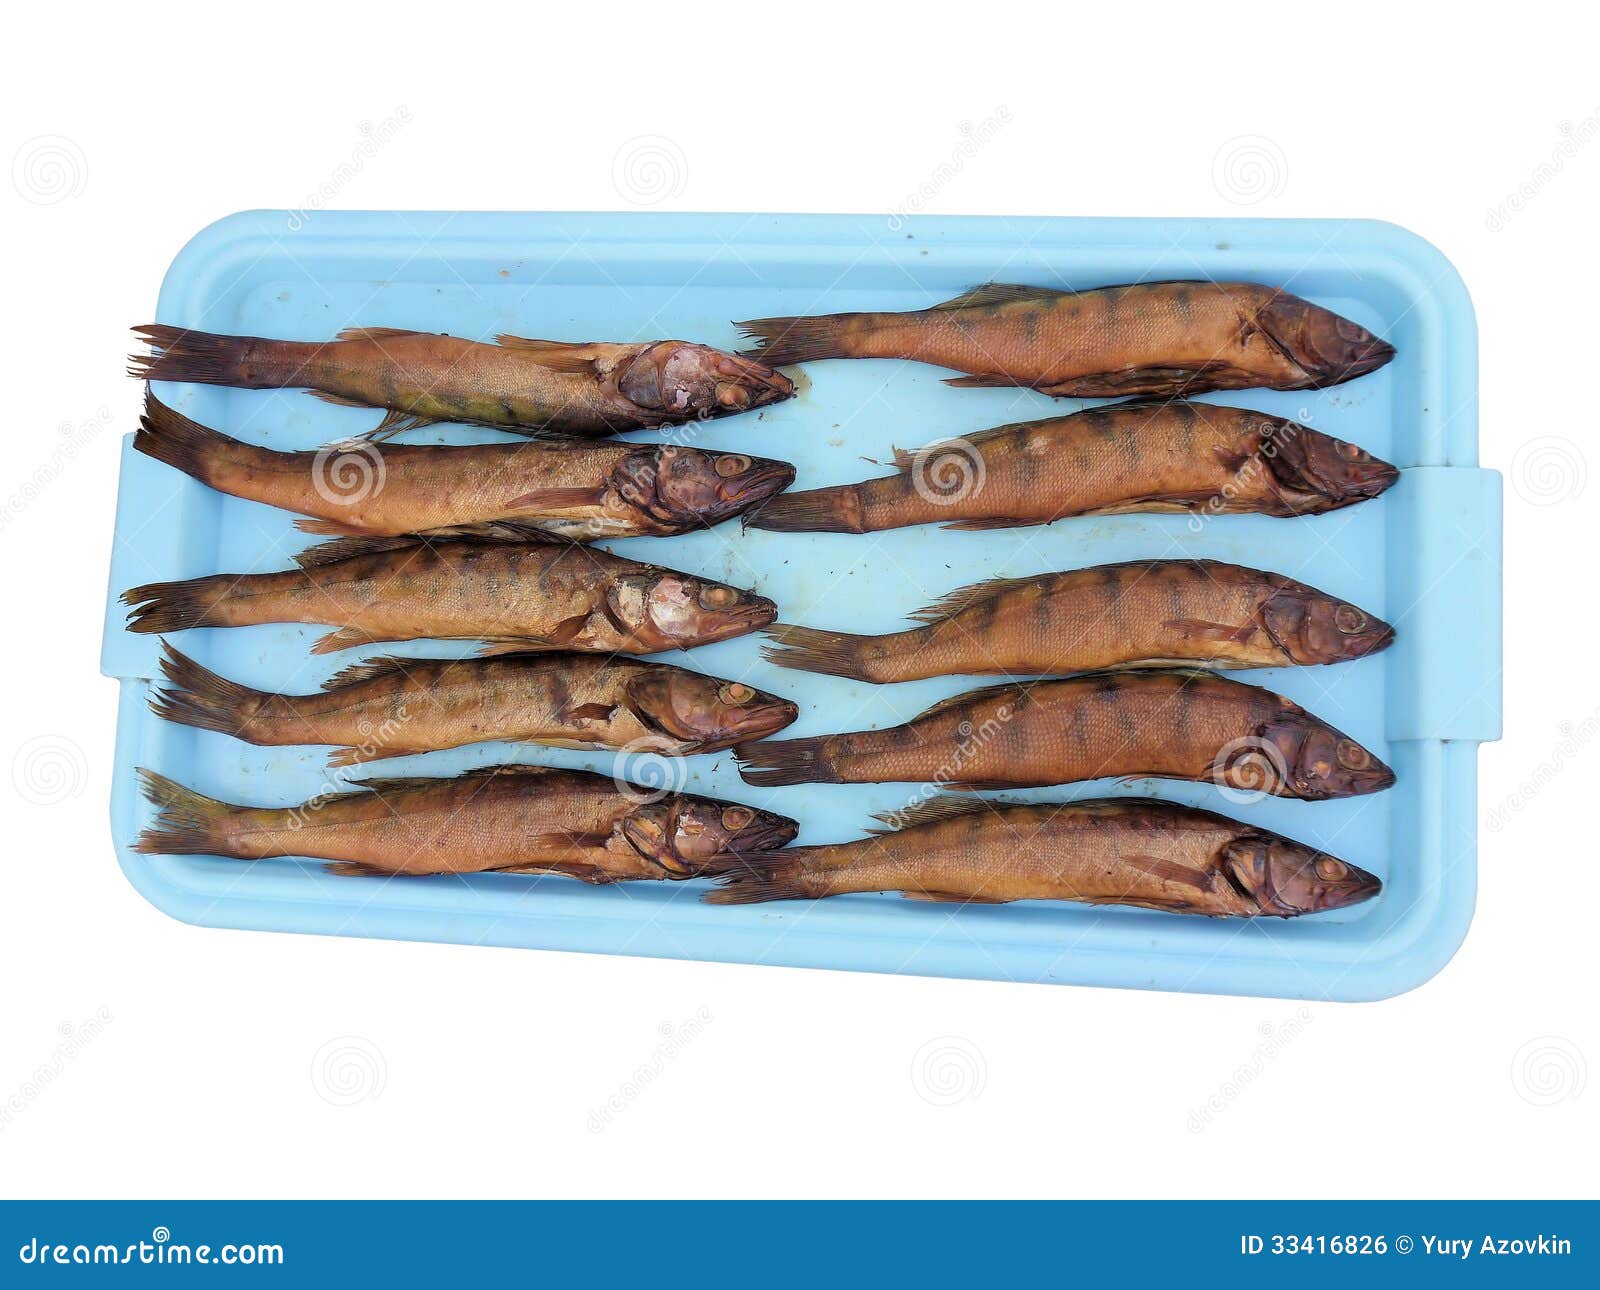 Smoked fish on a tray stock photo. Image of smoked, fishtail - 33416826